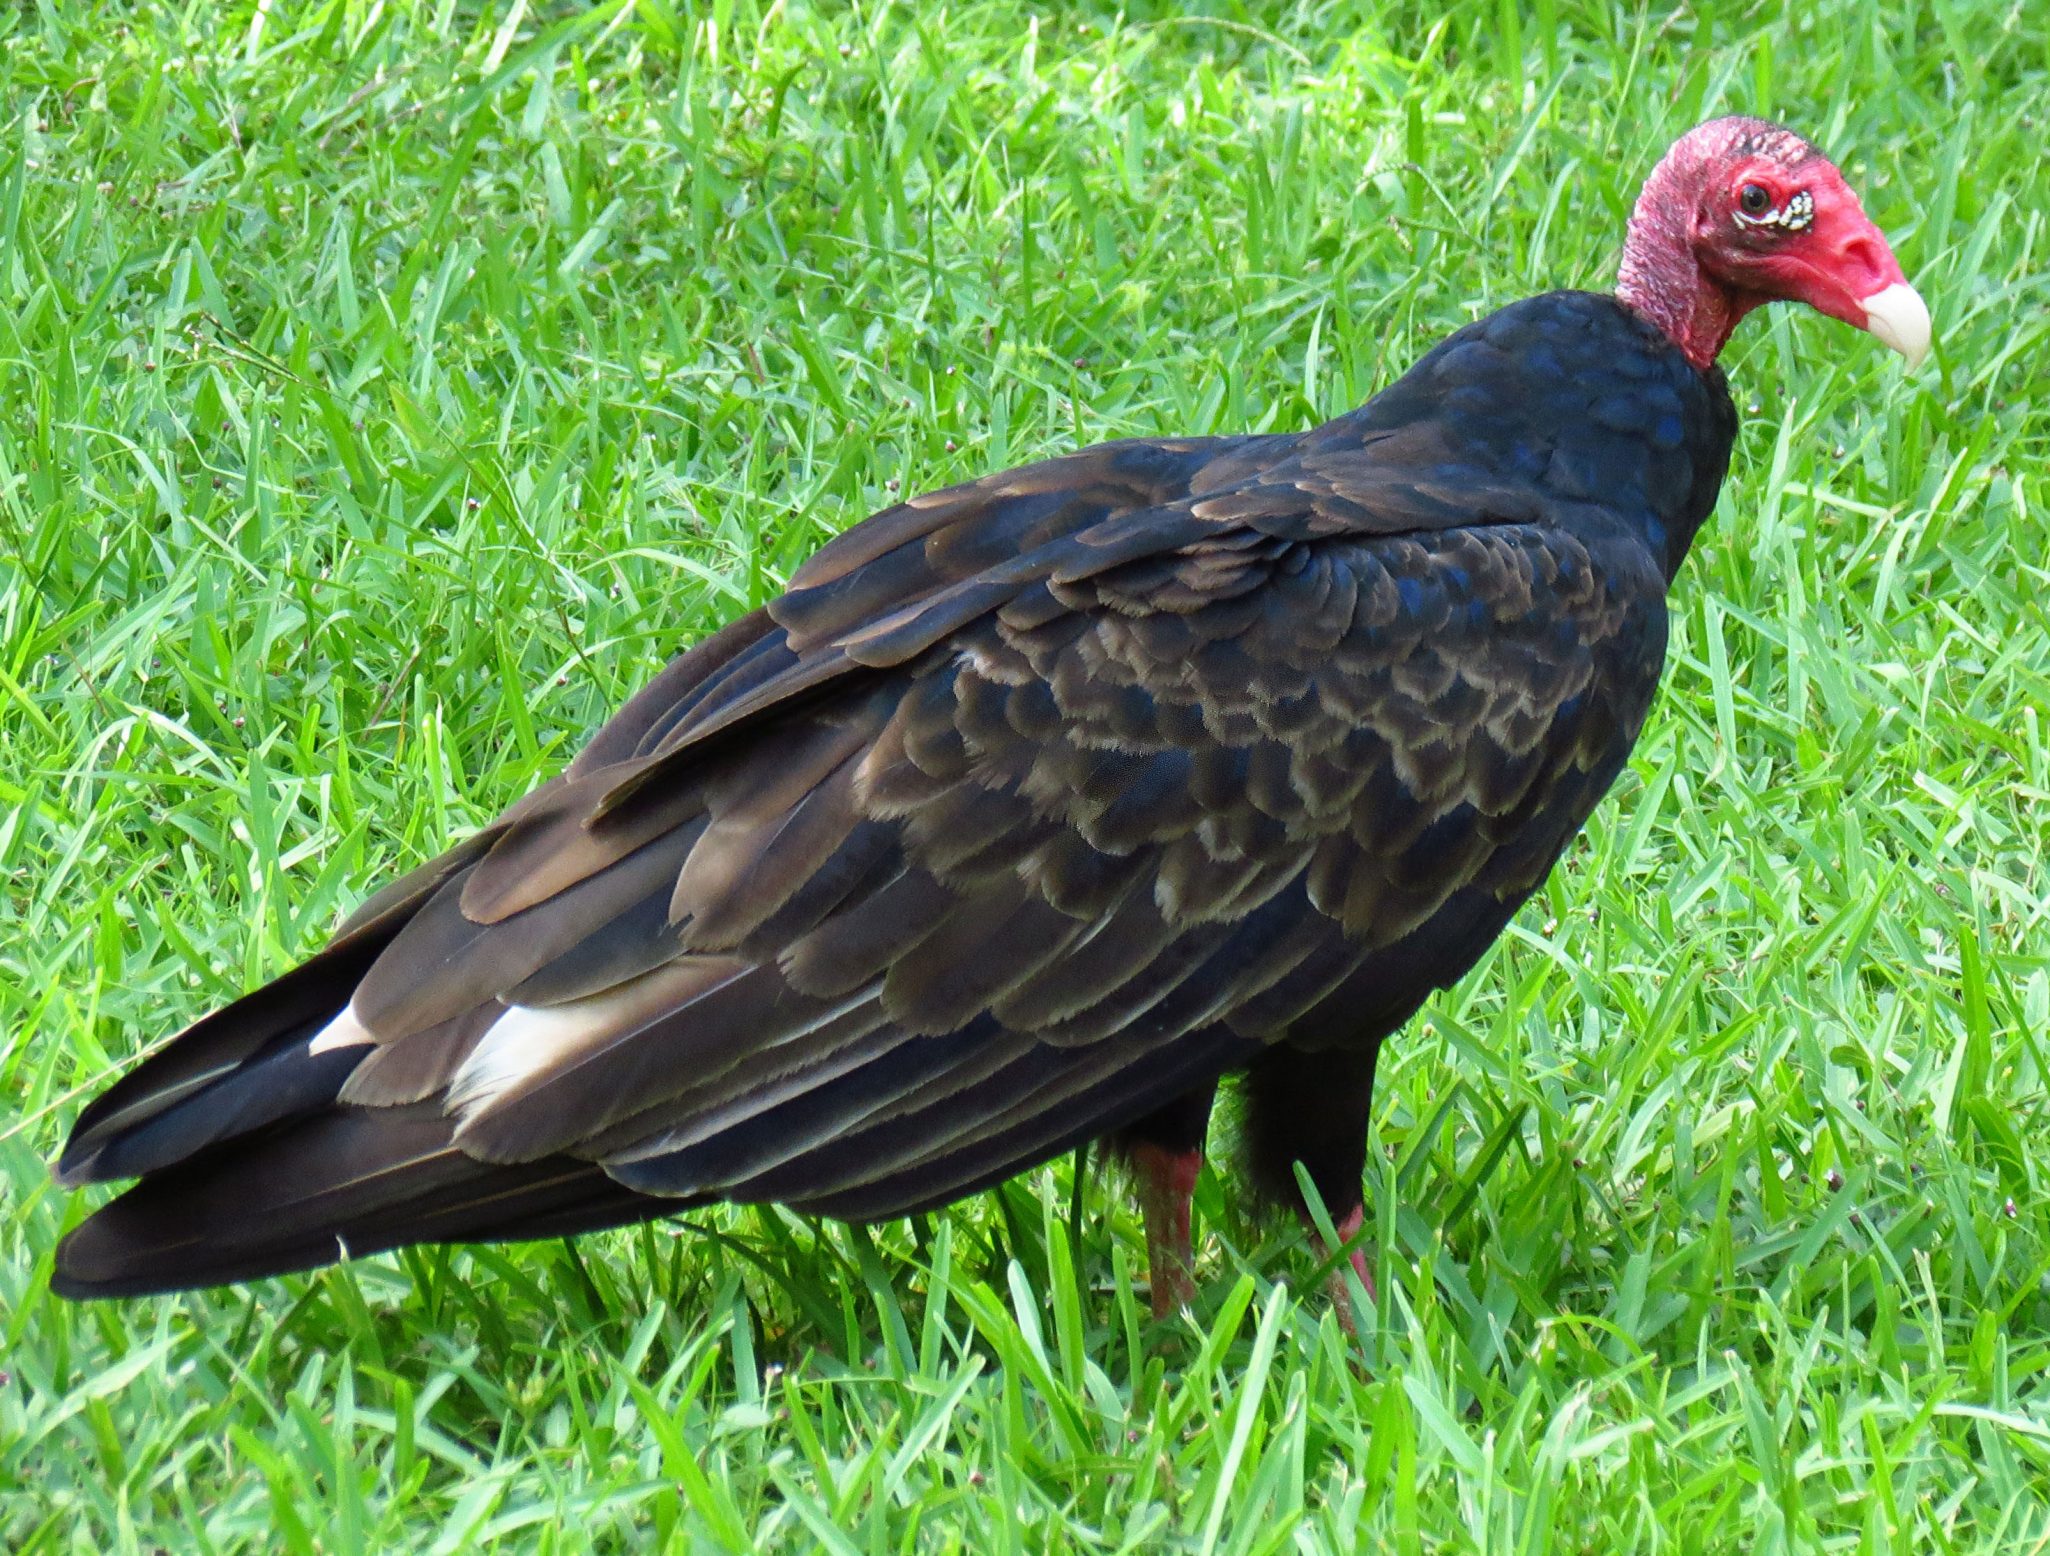 Turkey buzzard, 